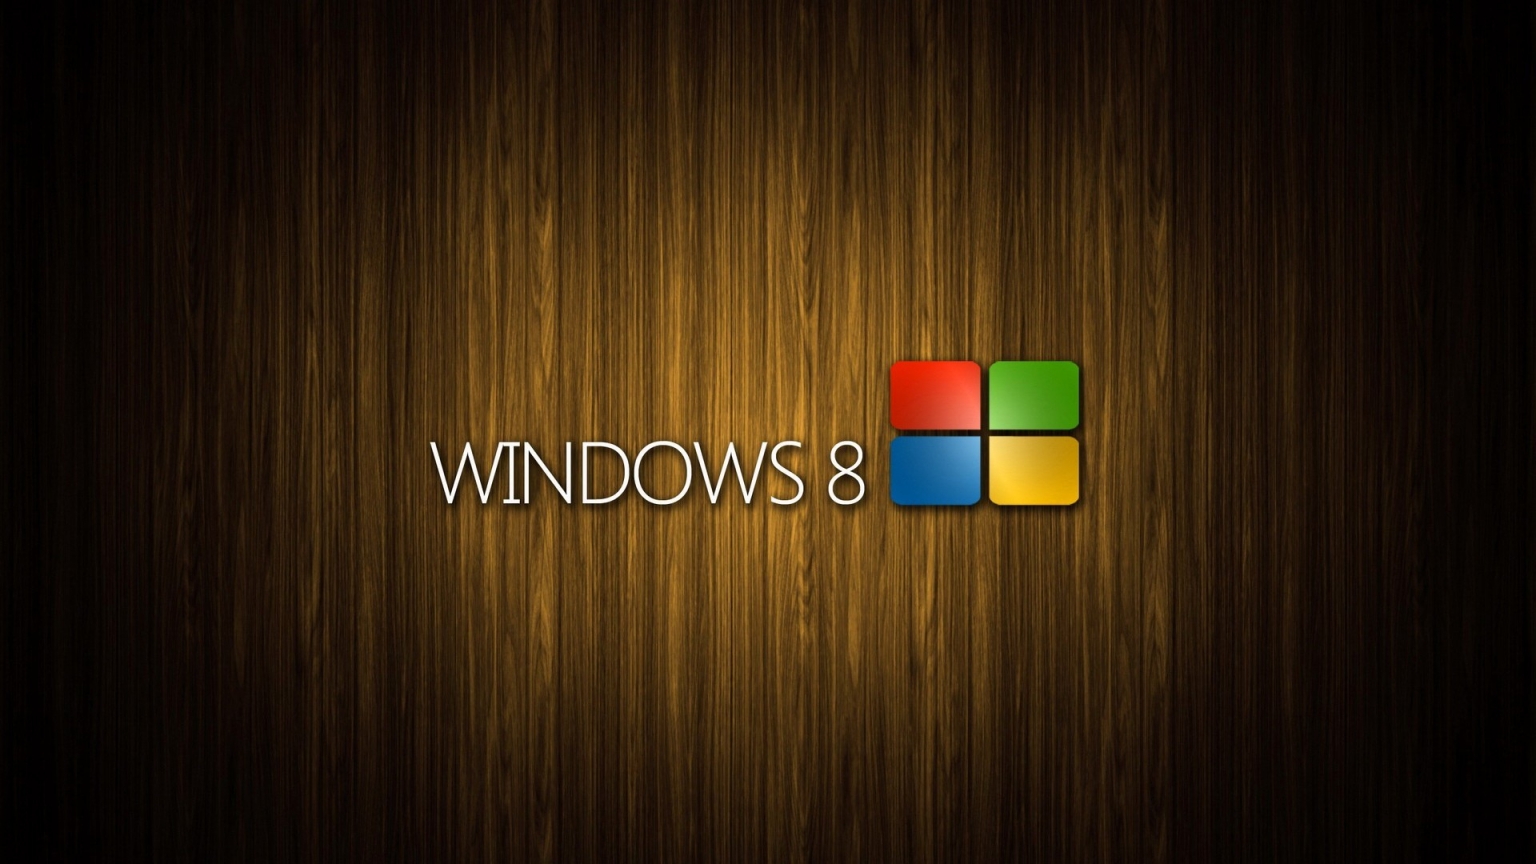 Microsoft Windows 8 Logo for 1536 x 864 HDTV resolution